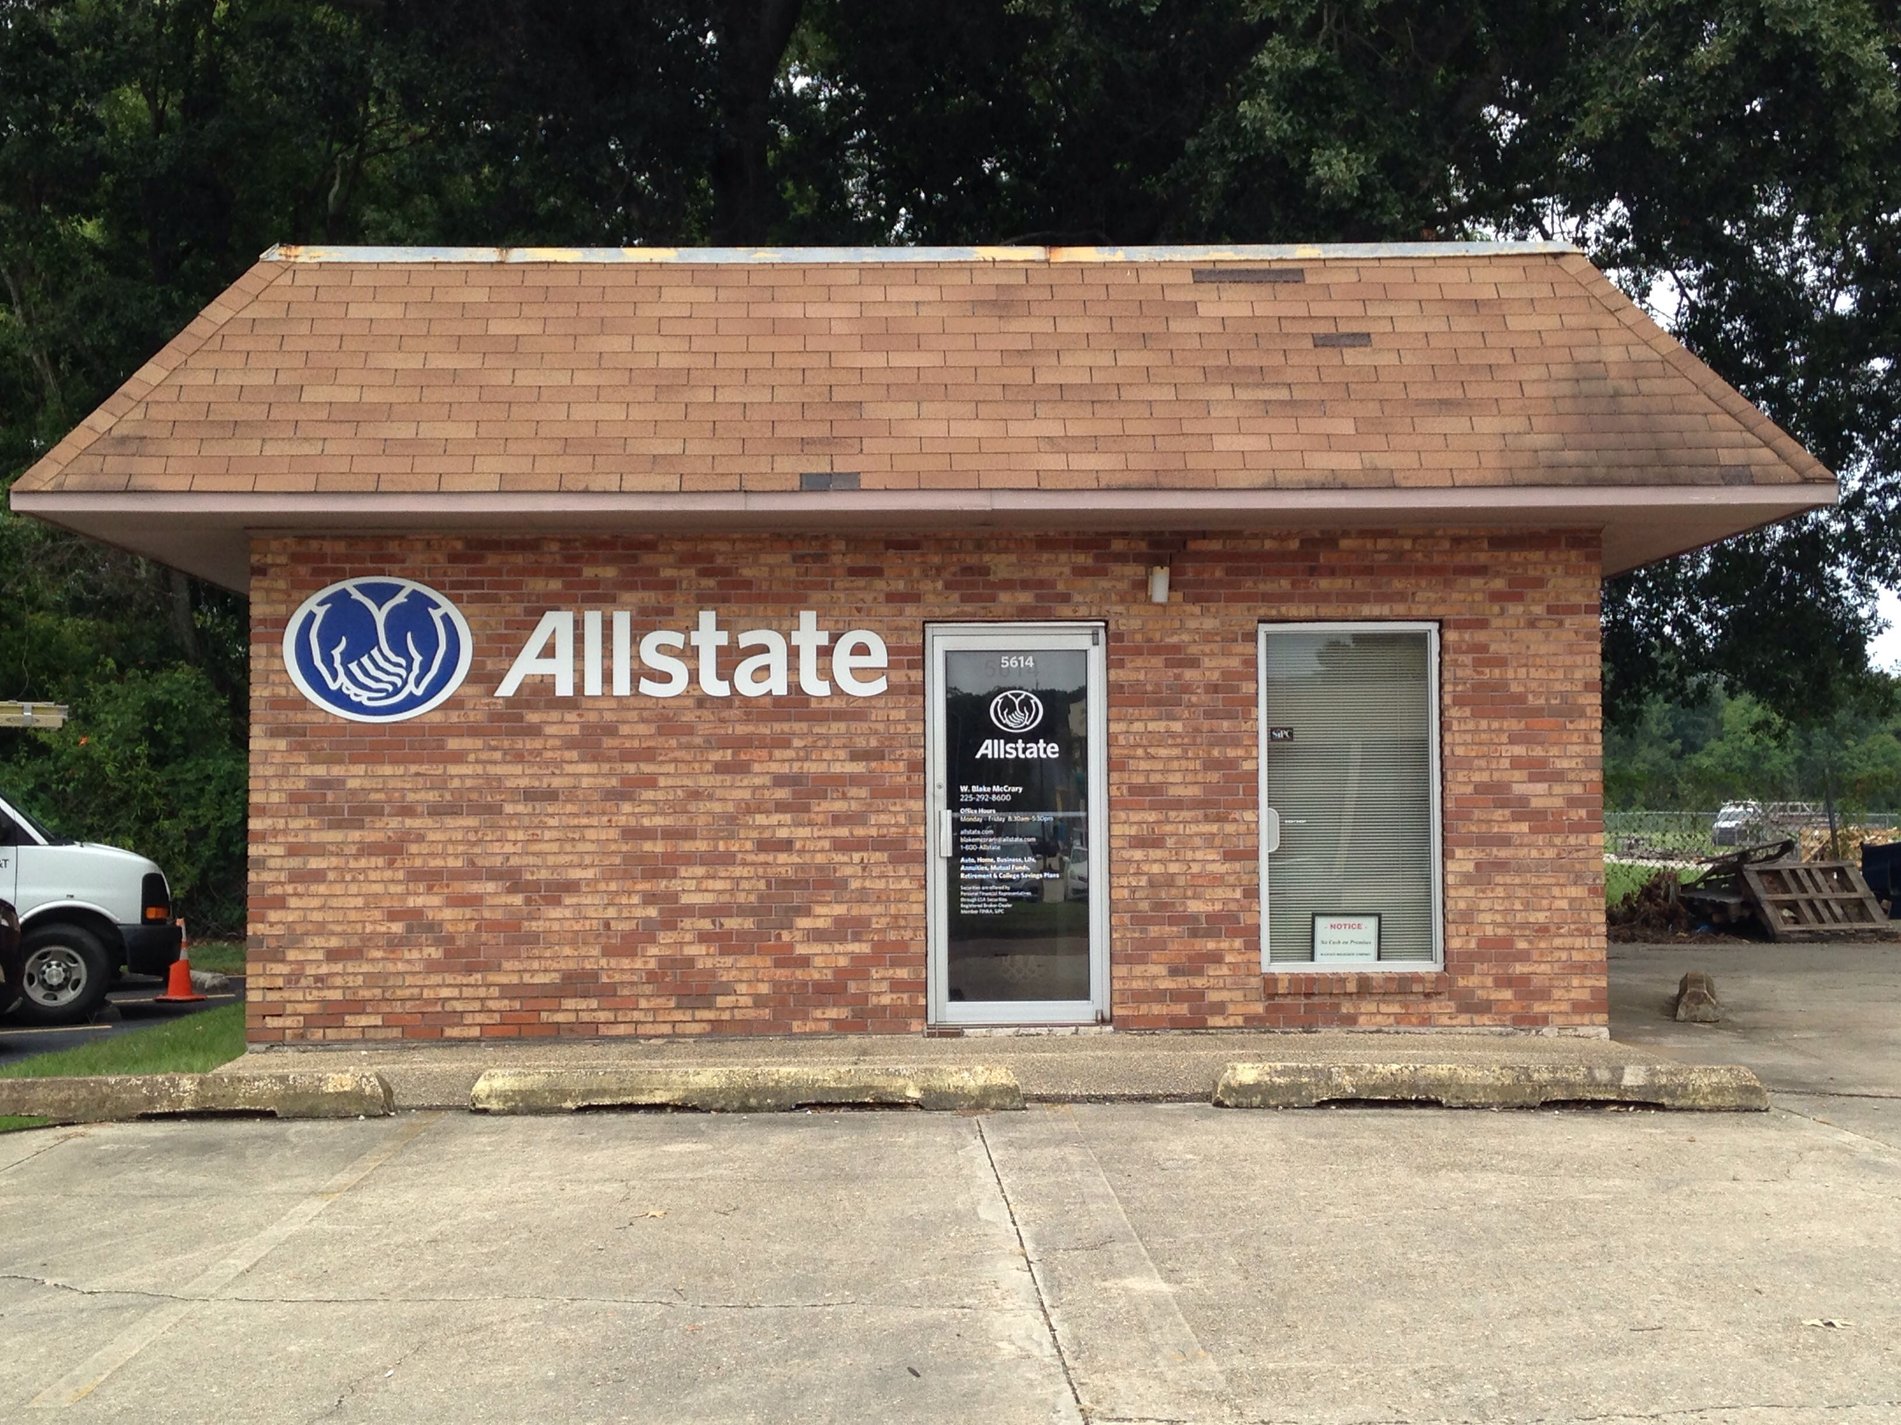 Allstate | Car Insurance in Baton Rouge, LA - W. Blake McCrary